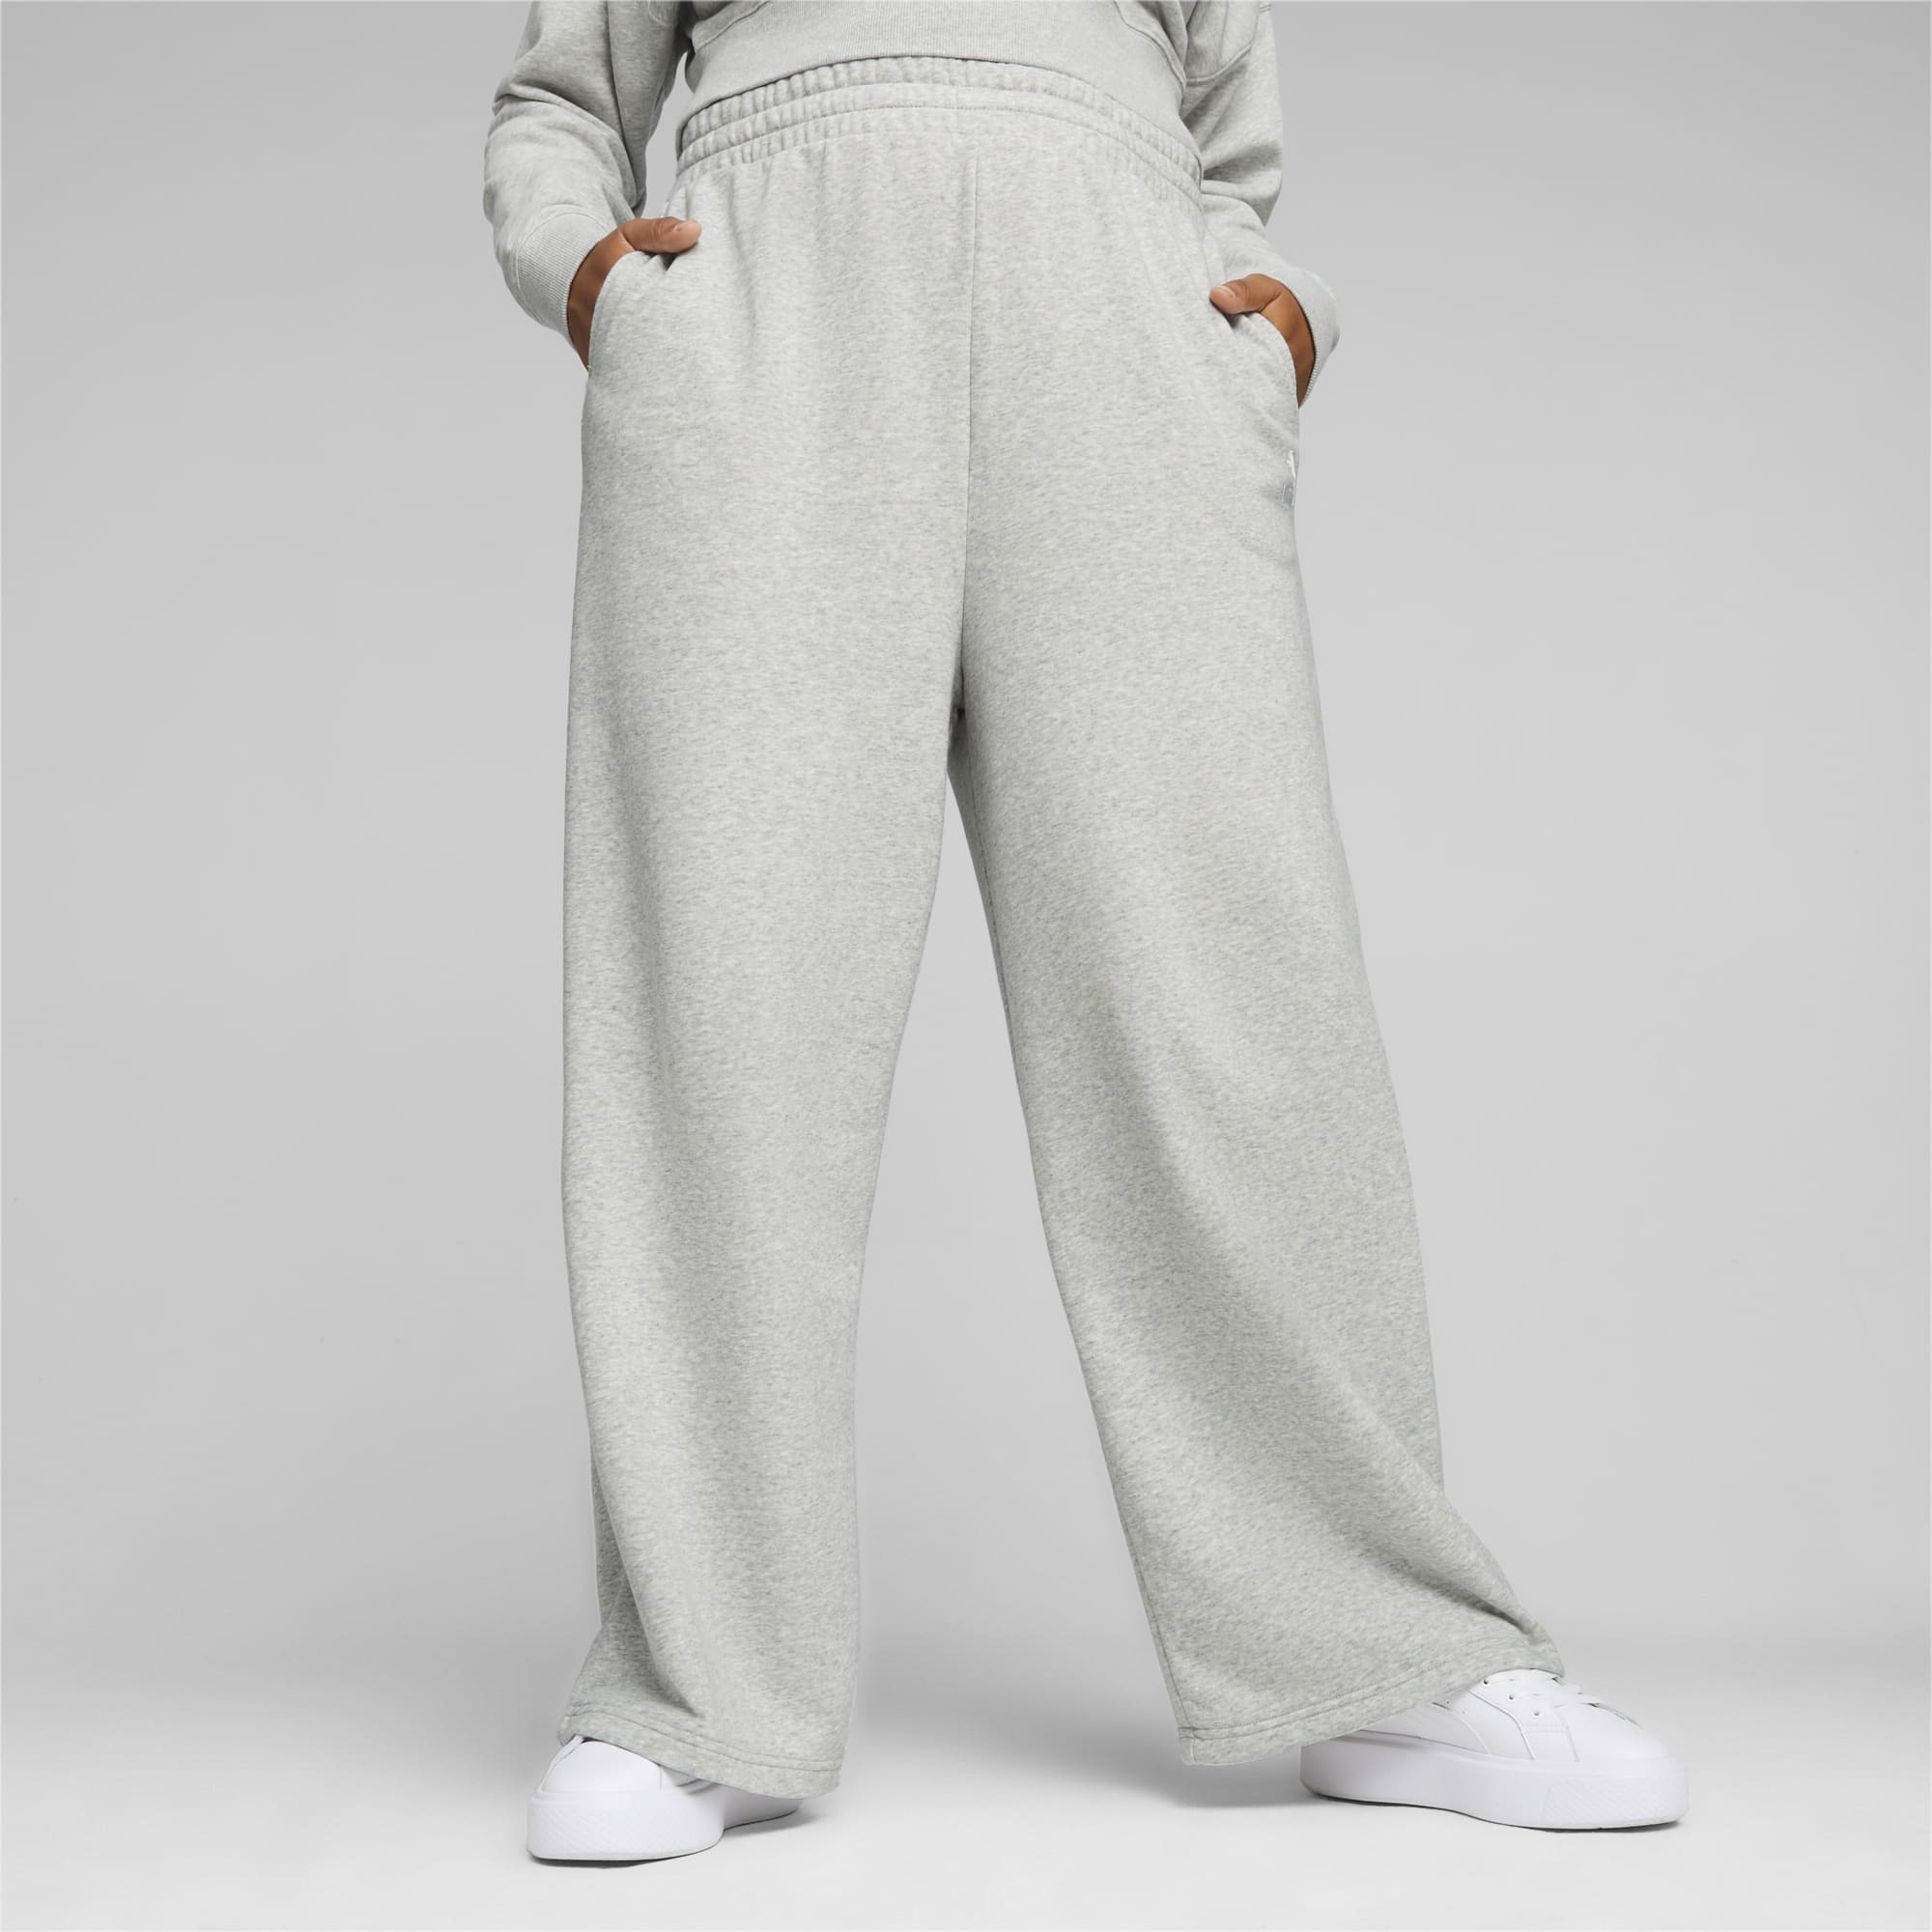 PUMA Classics Women's Relaxed Sweatpants, Light Grey Heather, Size 3XL, Clothing